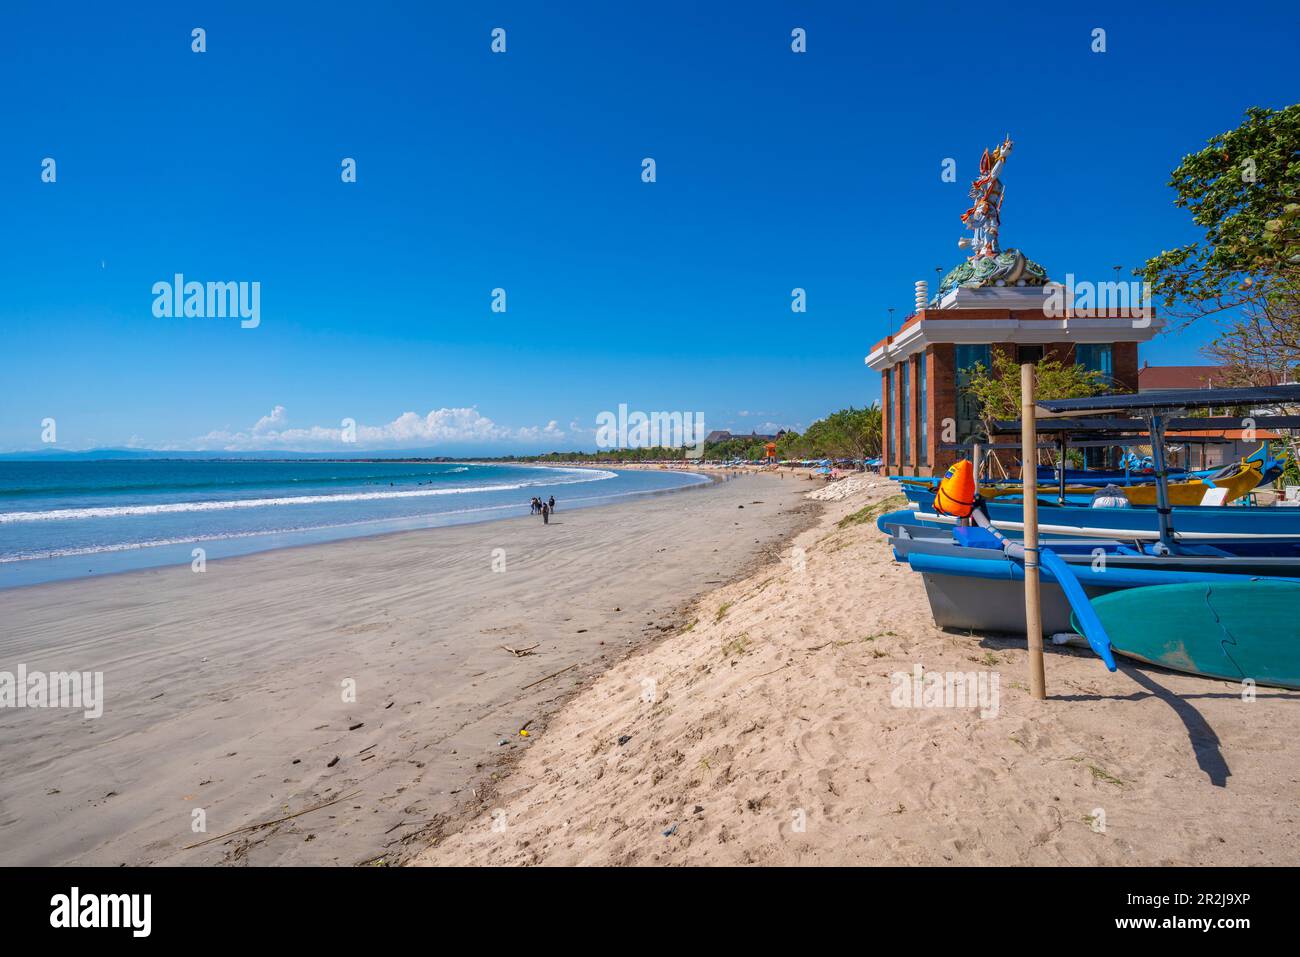 View of Shelter Kebencanaan overlooking Kuta Beach, Kuta, Bali, Indonesia, South East Asia, Asia Stock Photo